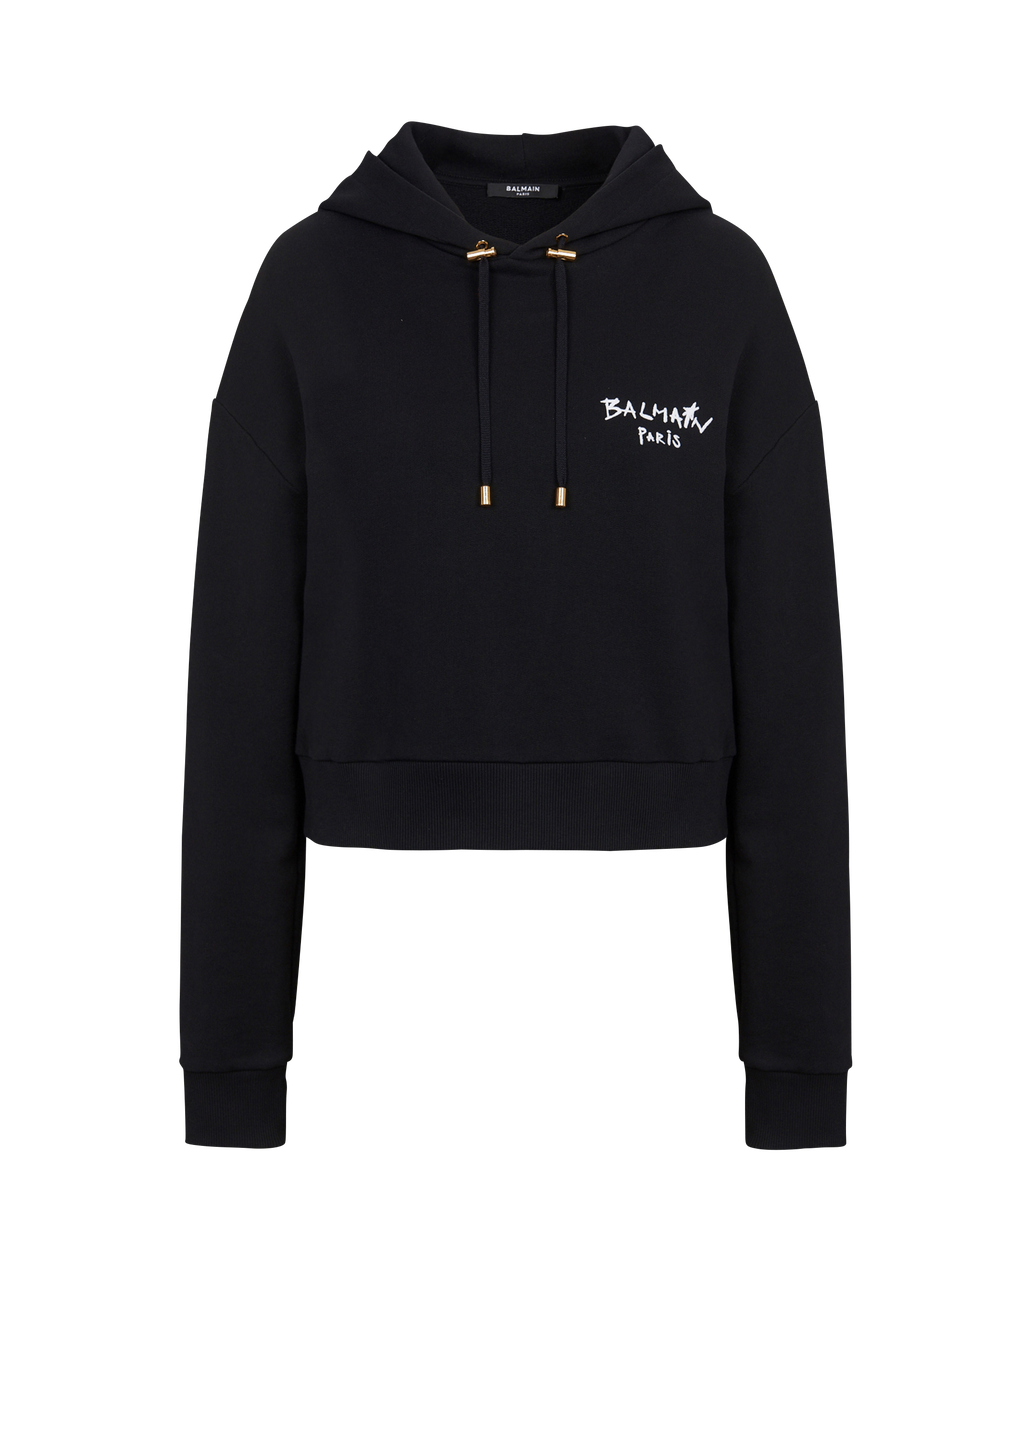 Cropped eco-design cotton sweatshirt with flocked graffiti Balmain logo, black, hi-res